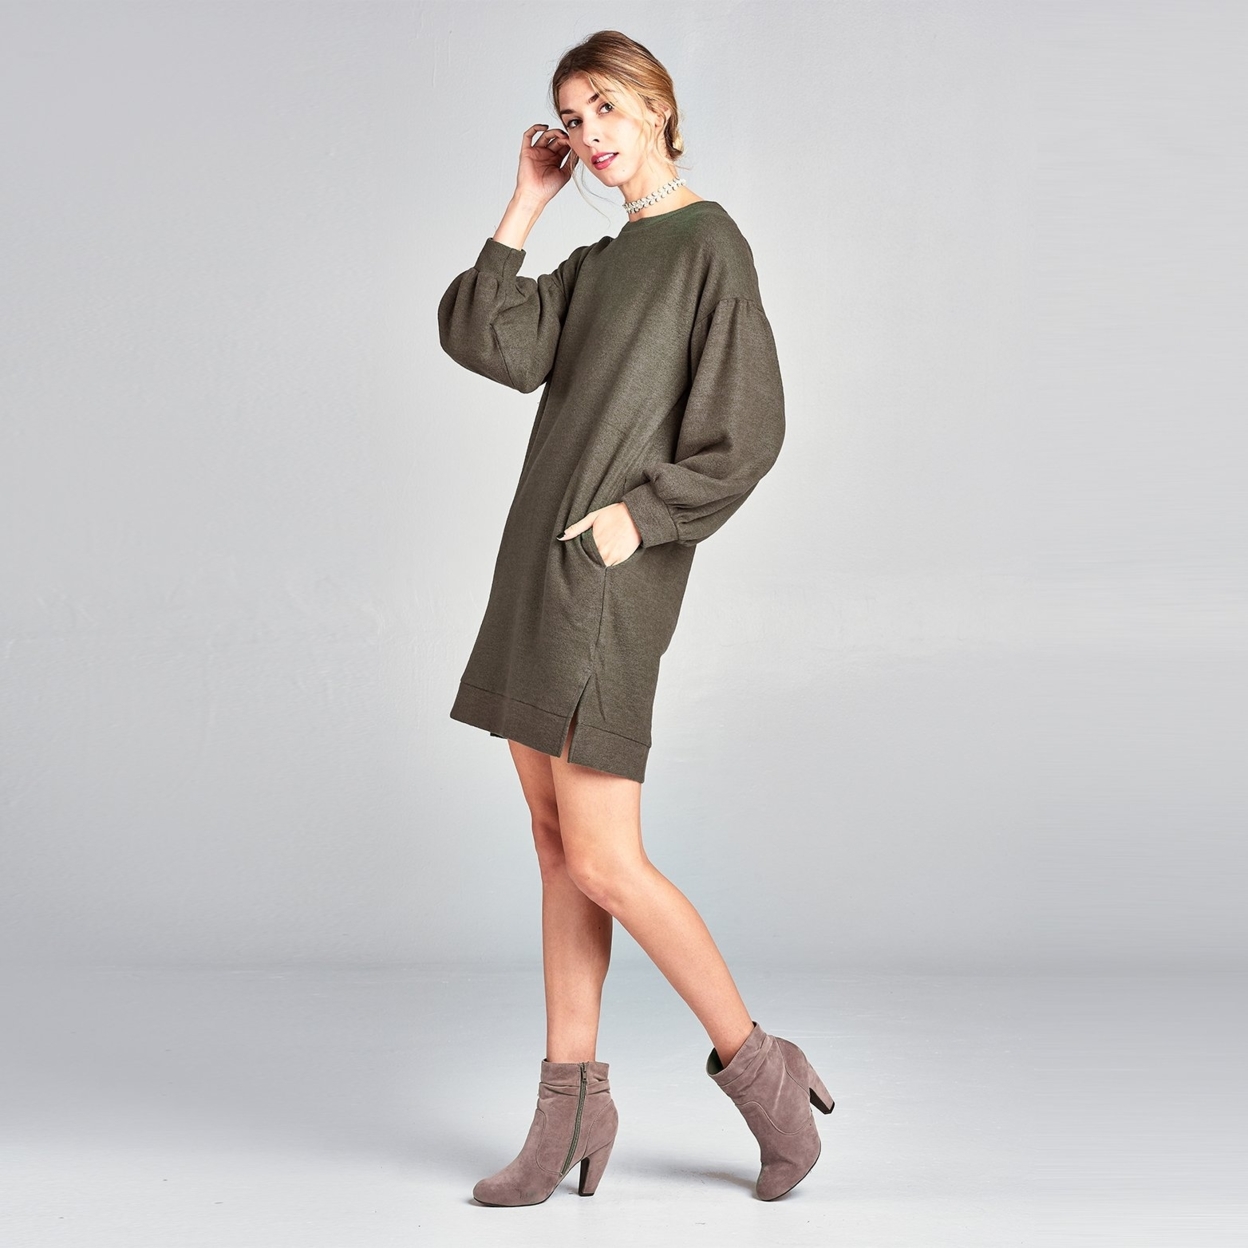 Puff Sleeve Sweater Dress - Olive, Large (12-14)